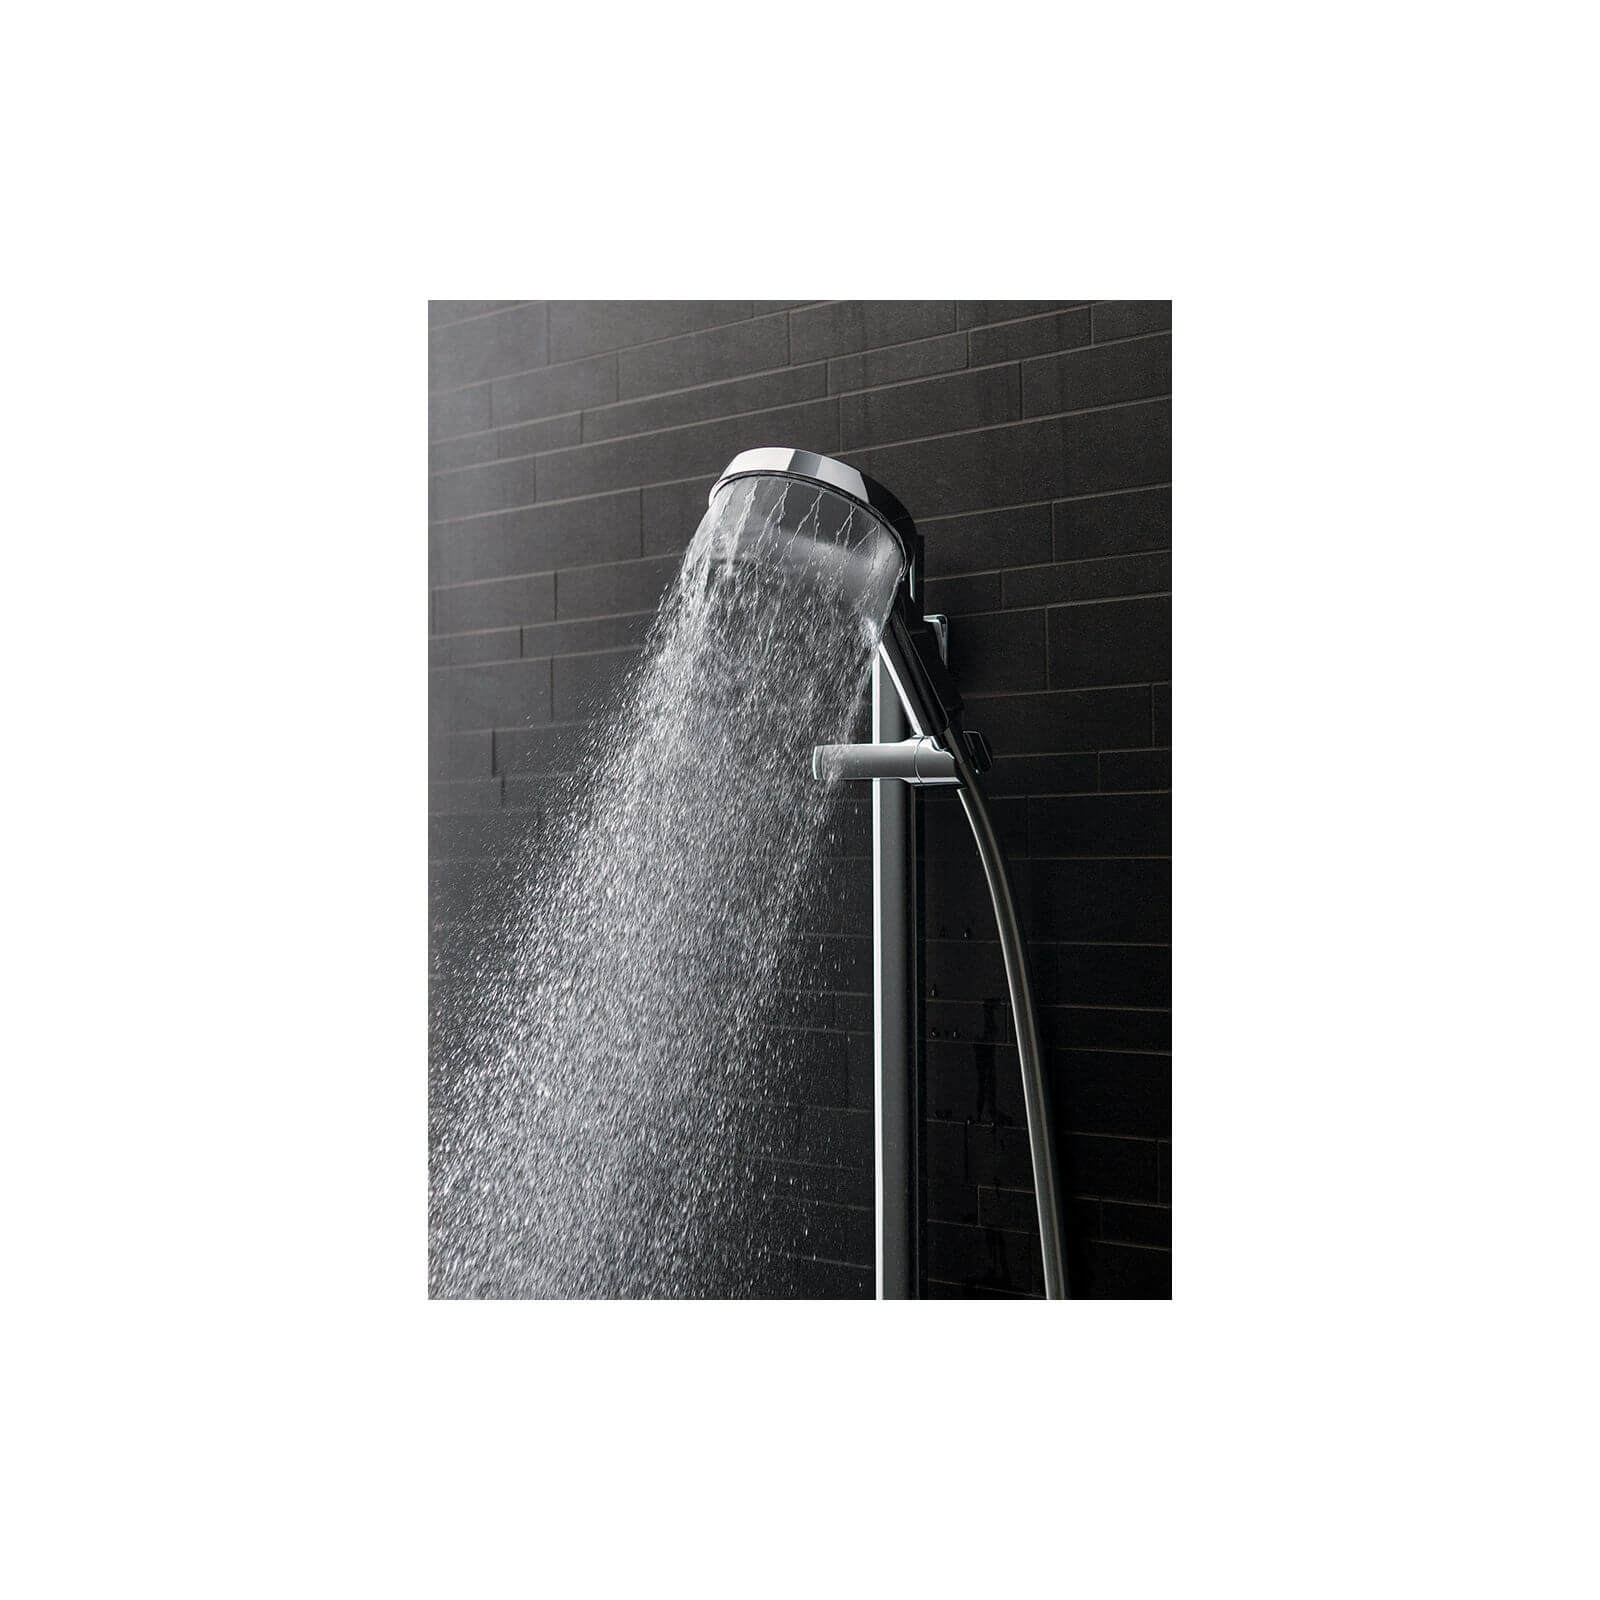 Methven Aio Aurajet Diverter Shower, Kit & Hi-Rise - Chrome